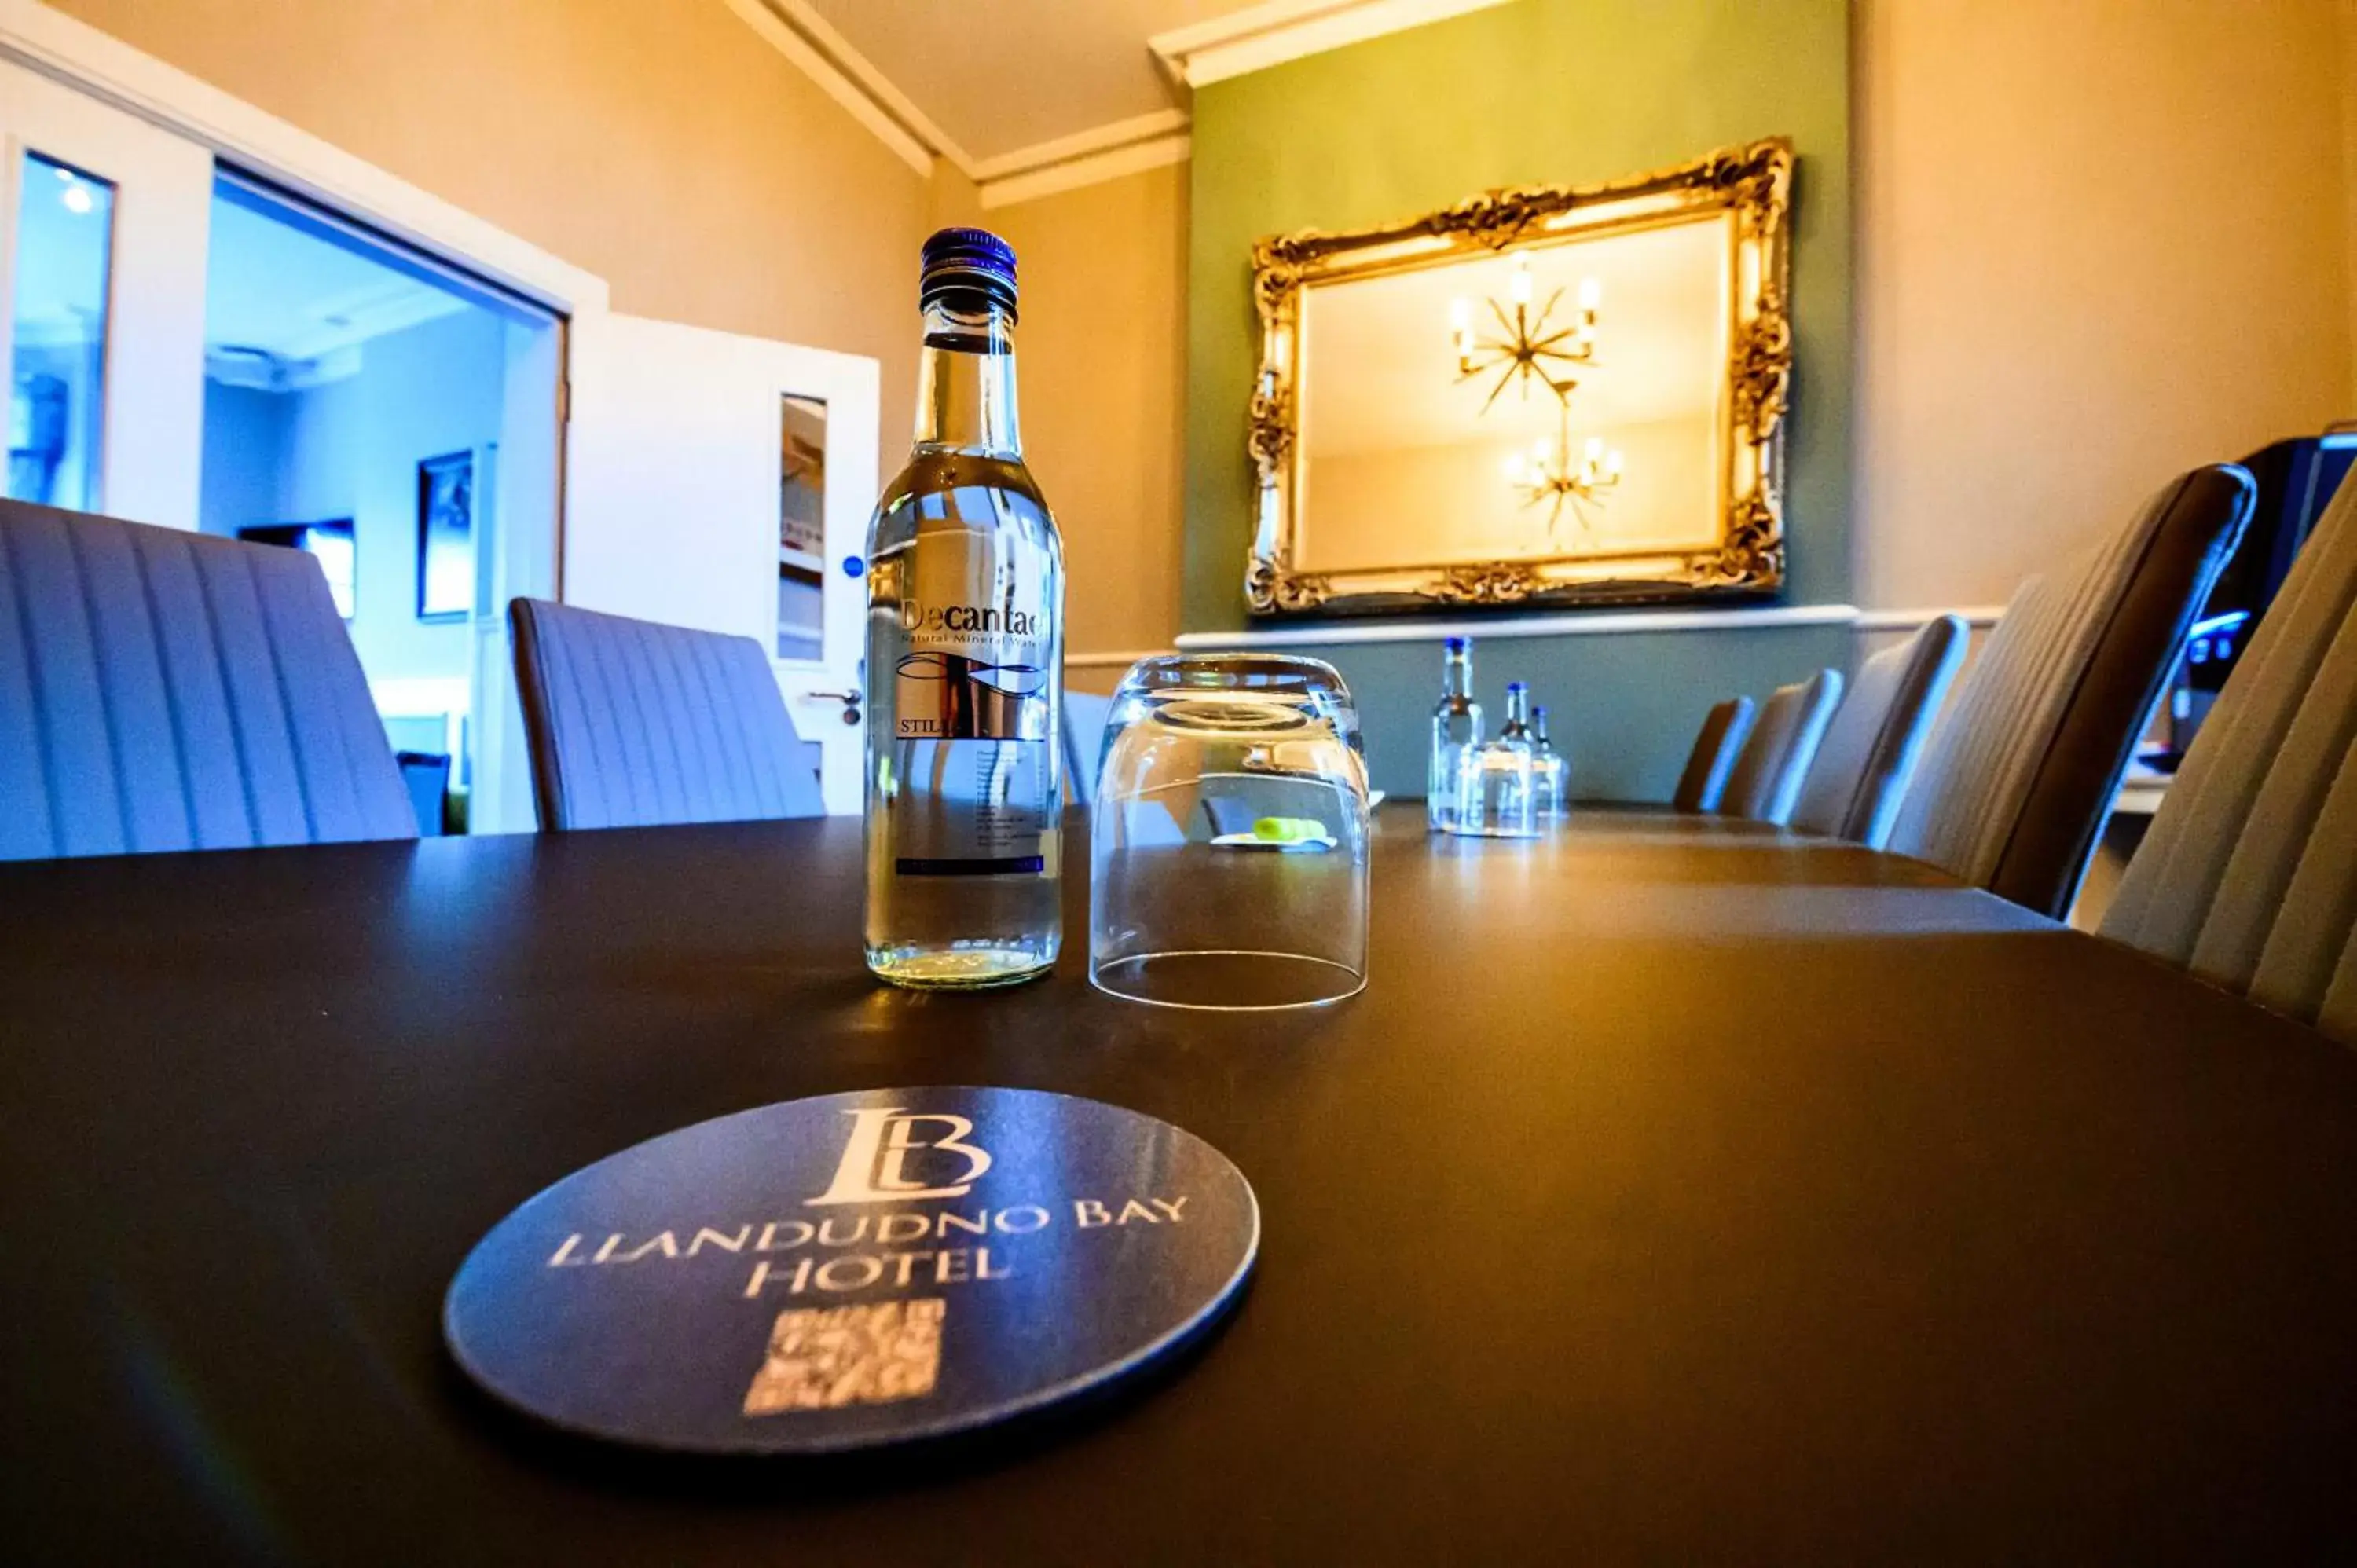 Meeting/conference room in Llandudno Bay Hotel